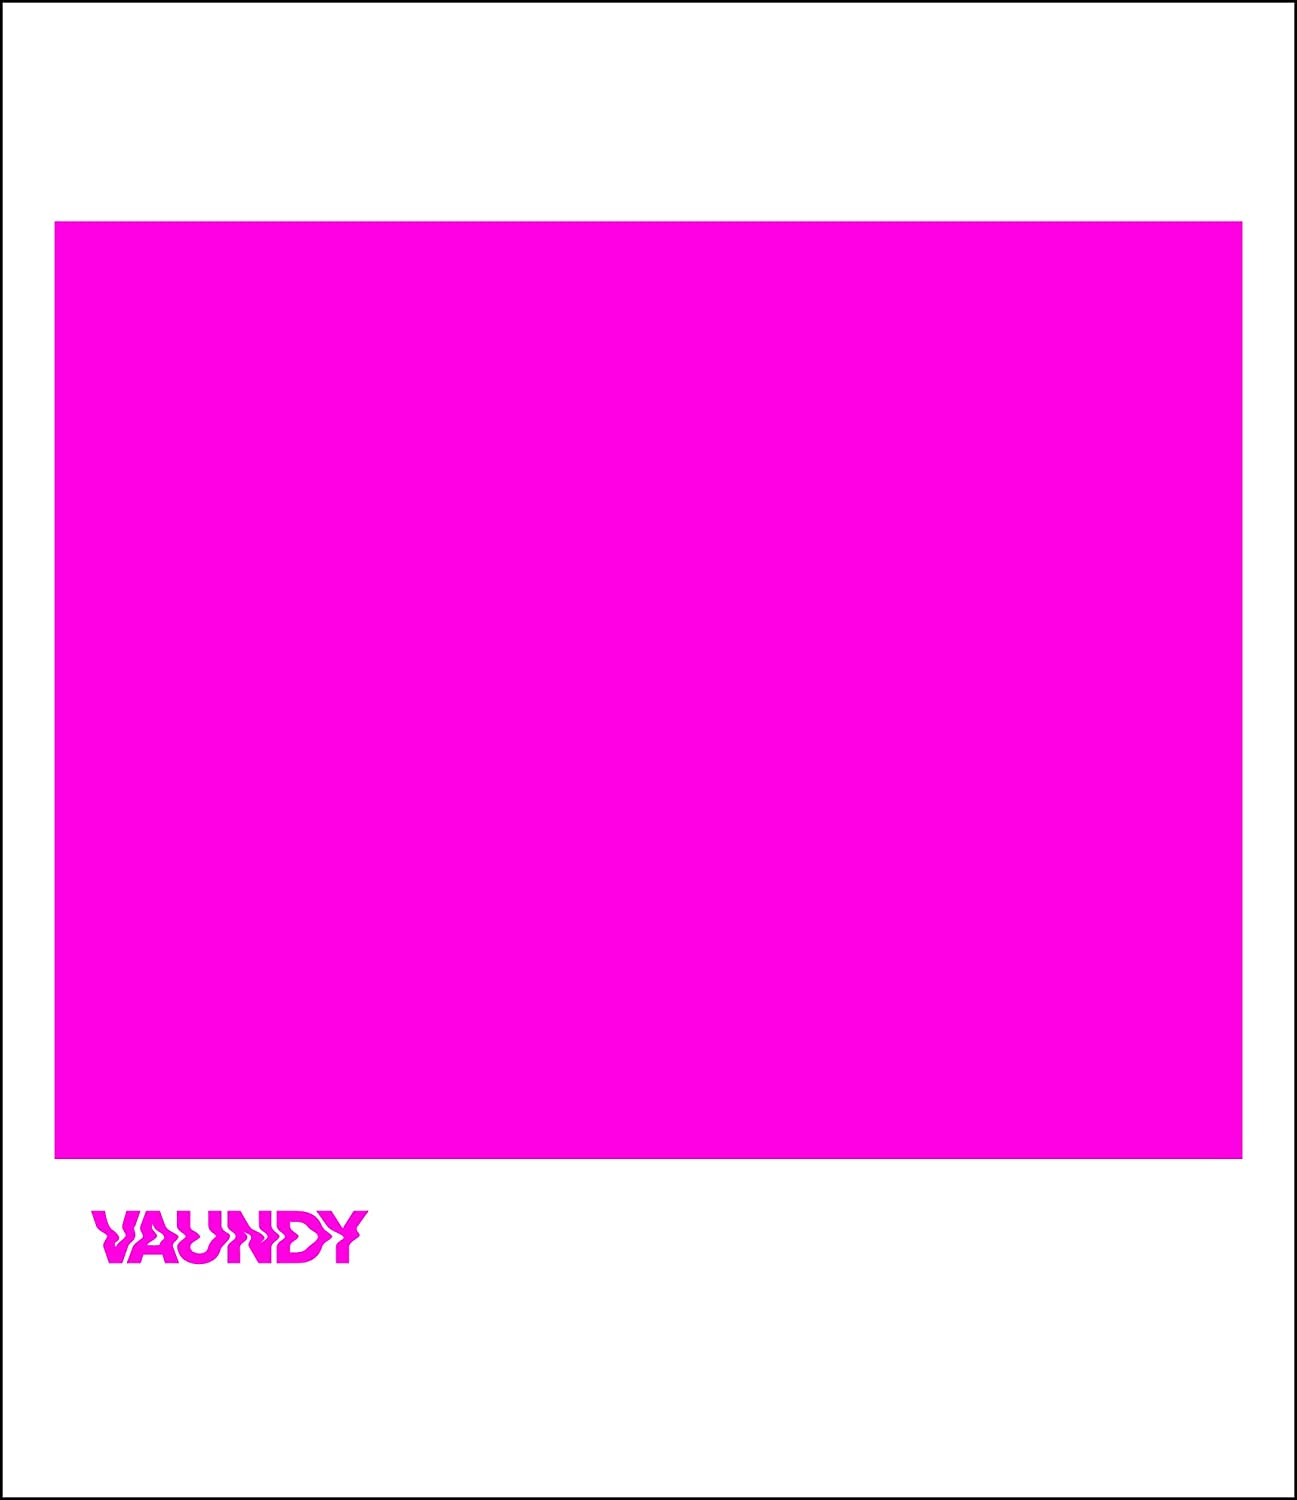 Vaundy strobo+ アナログ盤 アルバム レコード LP バウンディ - 邦楽